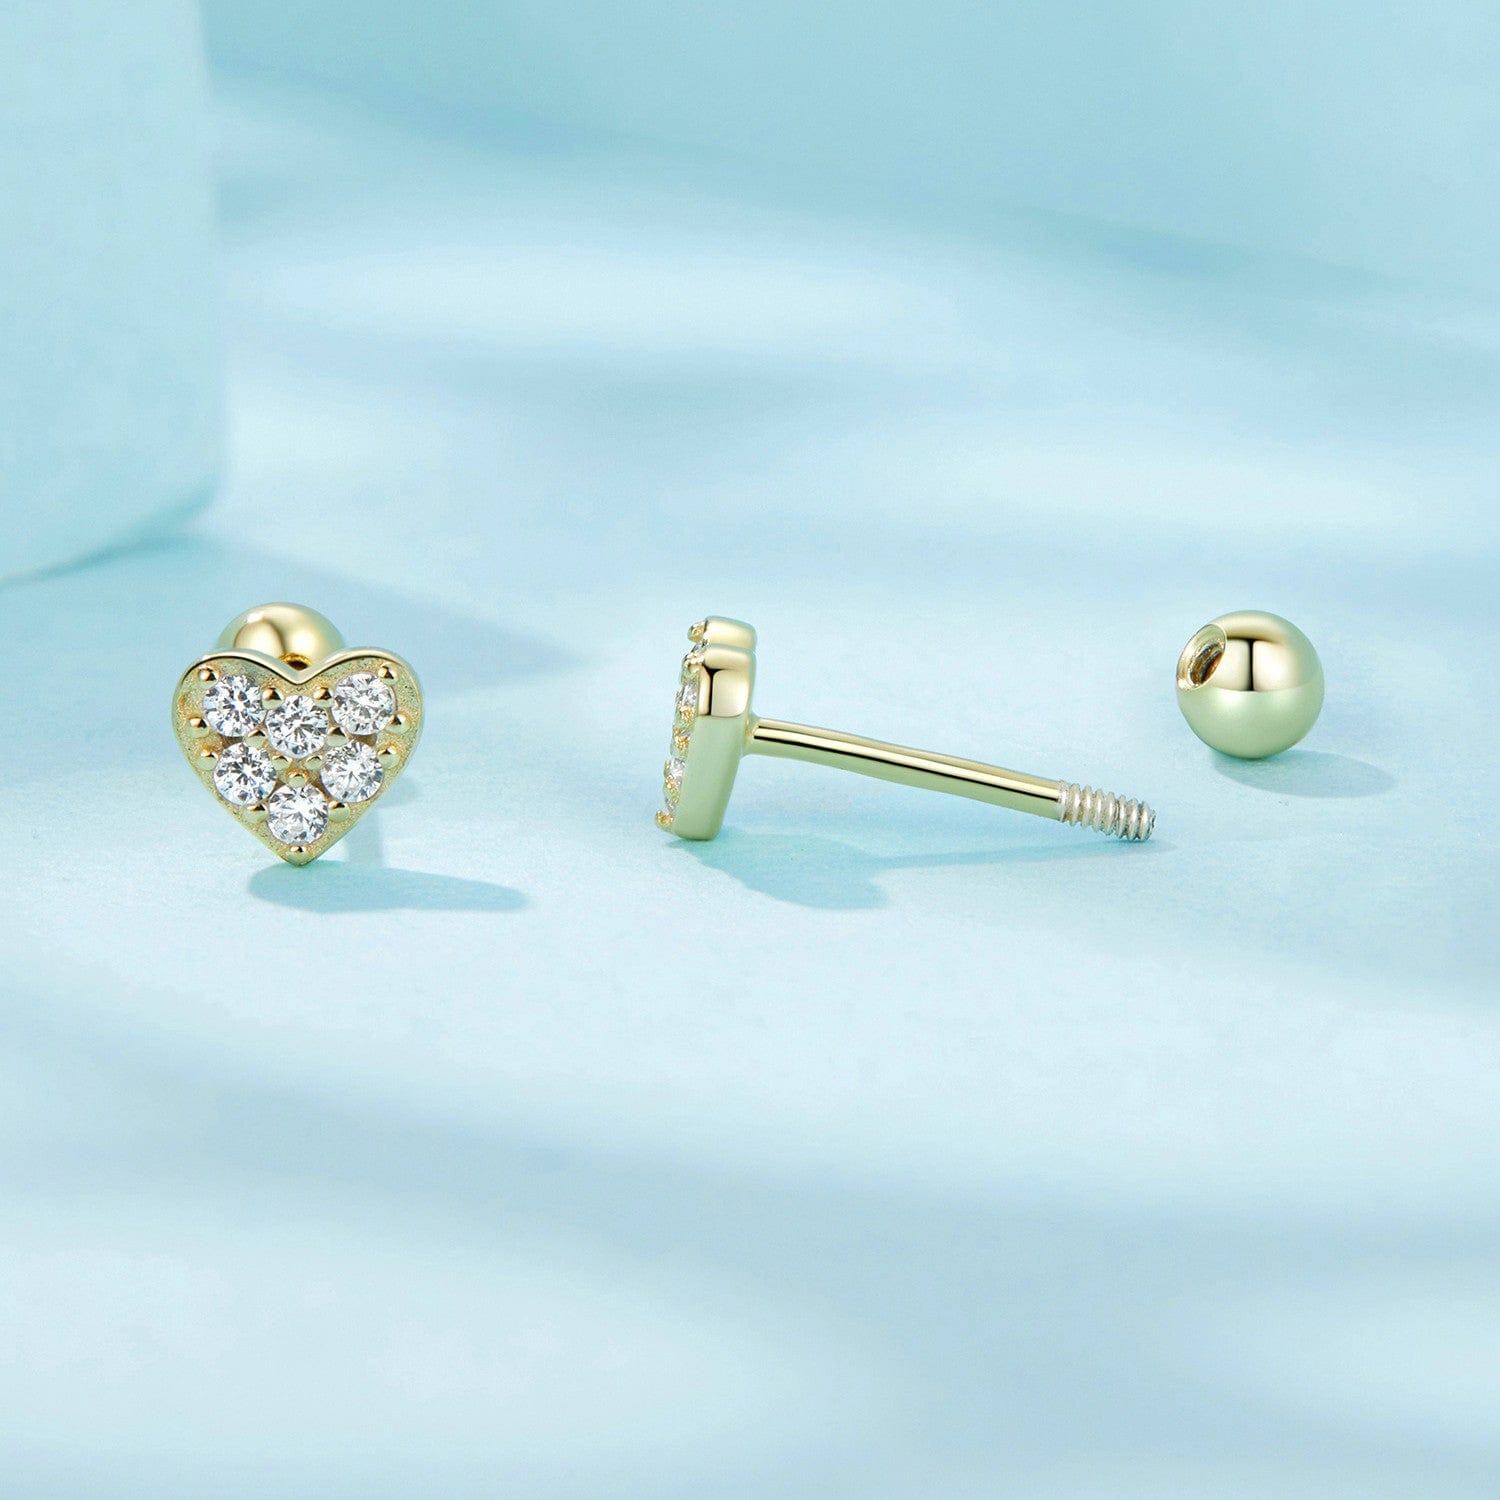 jewelaus Earrings Small Gold Stud Earrings